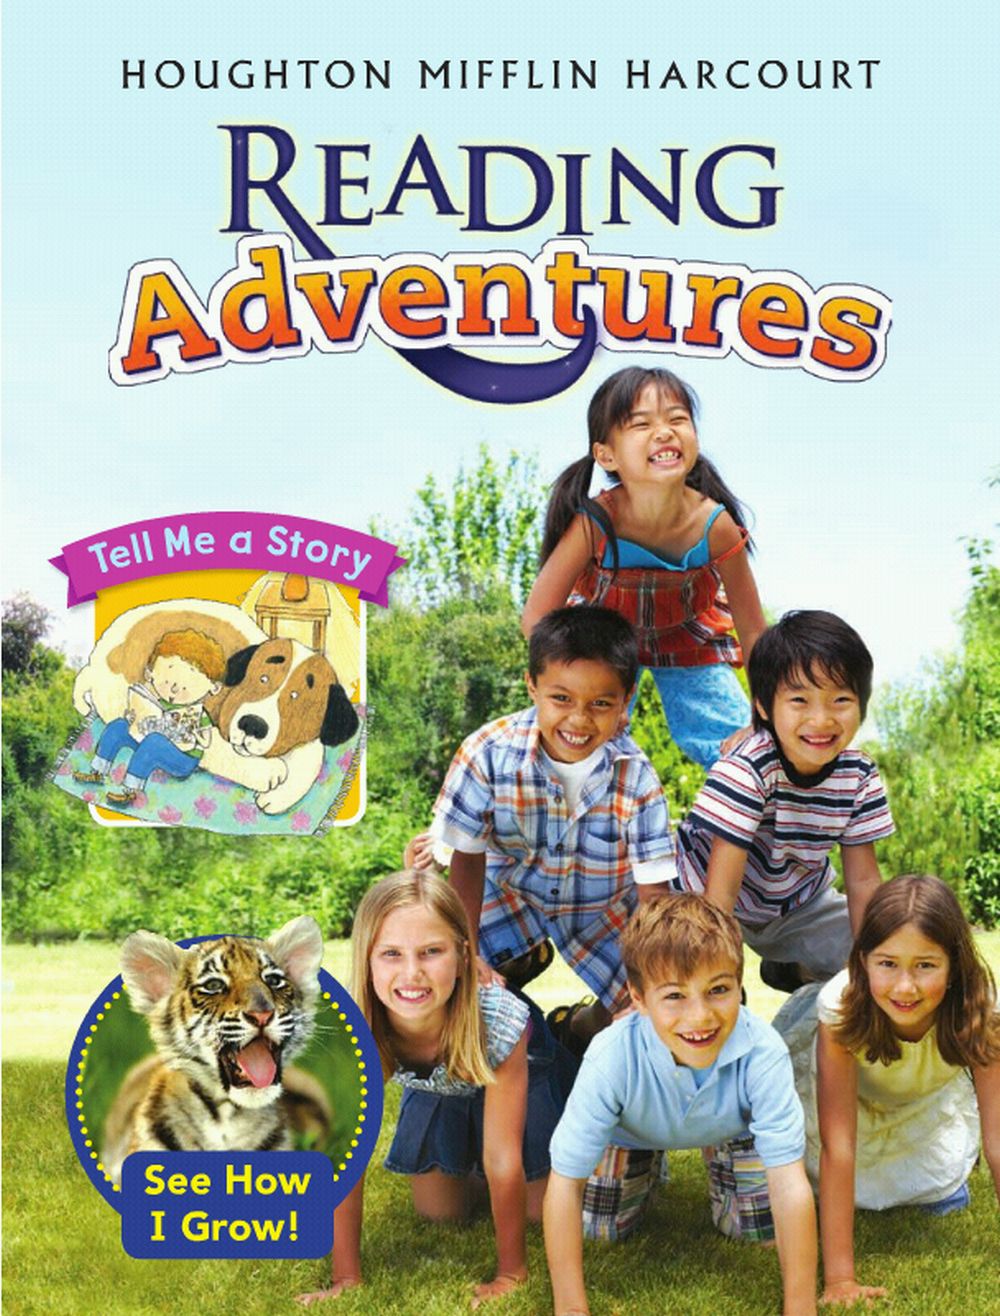 Student adventures. Reading Adventures 1. Reading Adventures. Adventures student book.